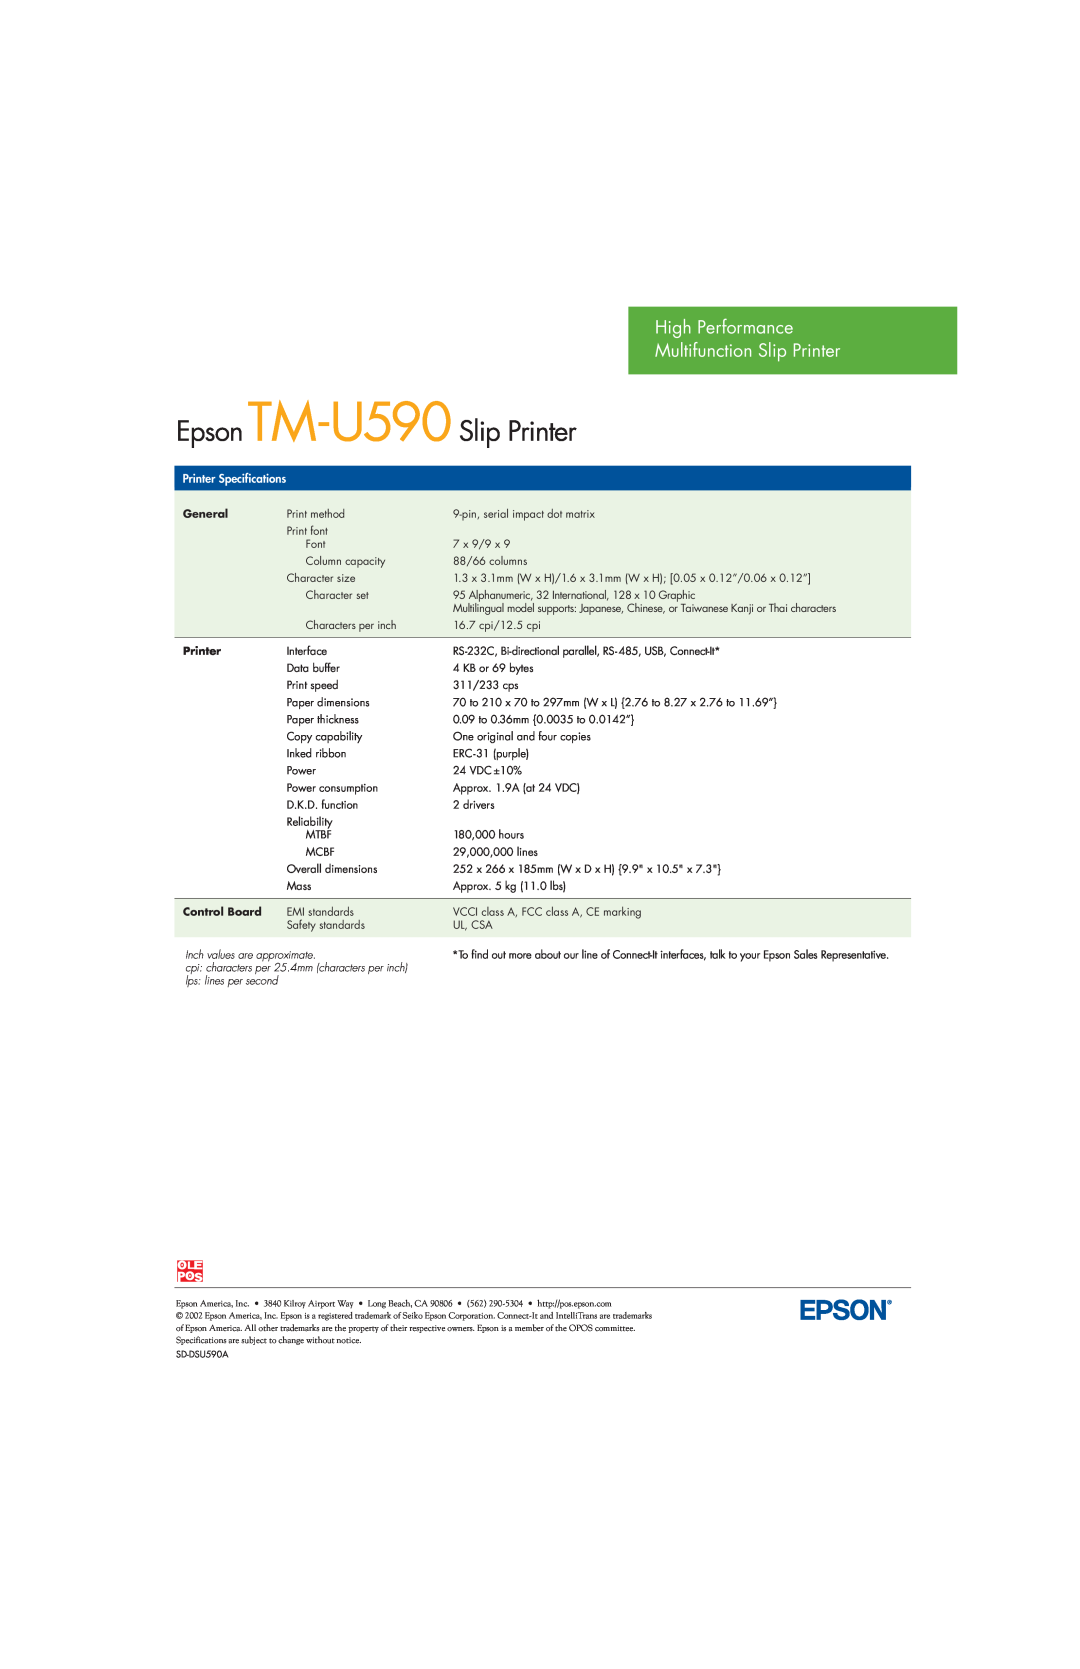 Epson TM-U560 Epson TM-U590 Slip Printer, High Performance Multifunction Slip Printer, Printer Specifications, General 